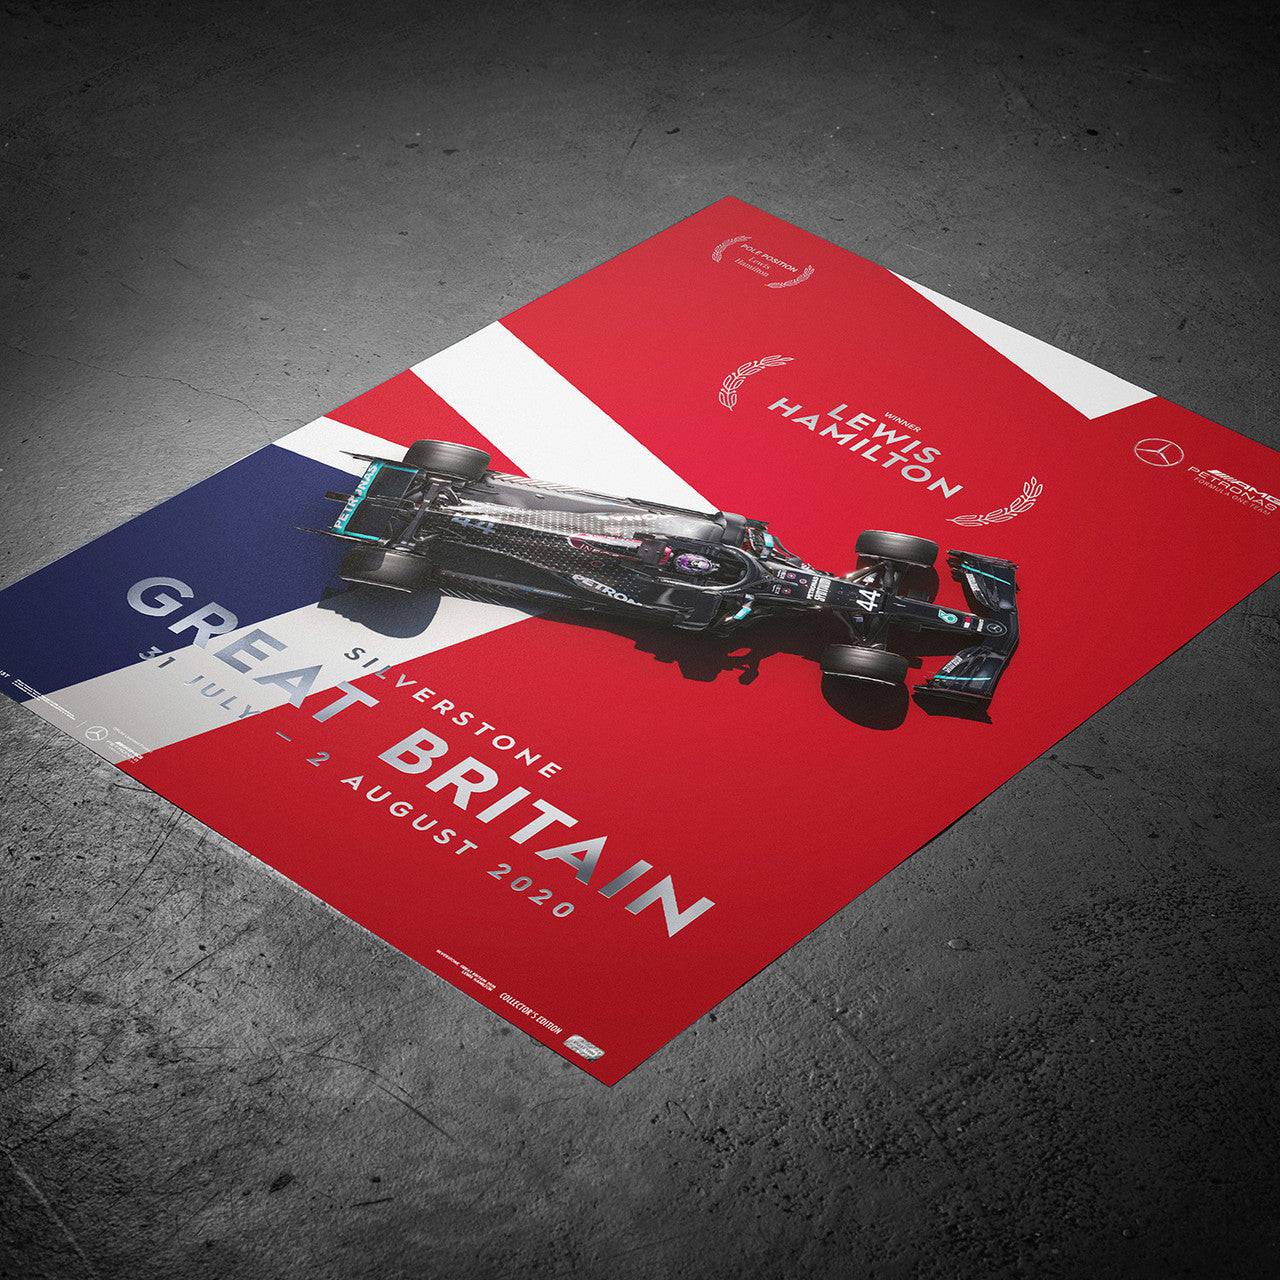 Mercedes-AMG Petronas F1 Team - Great Britain 2020 - Lewis Hamilton | Collector’s Edition